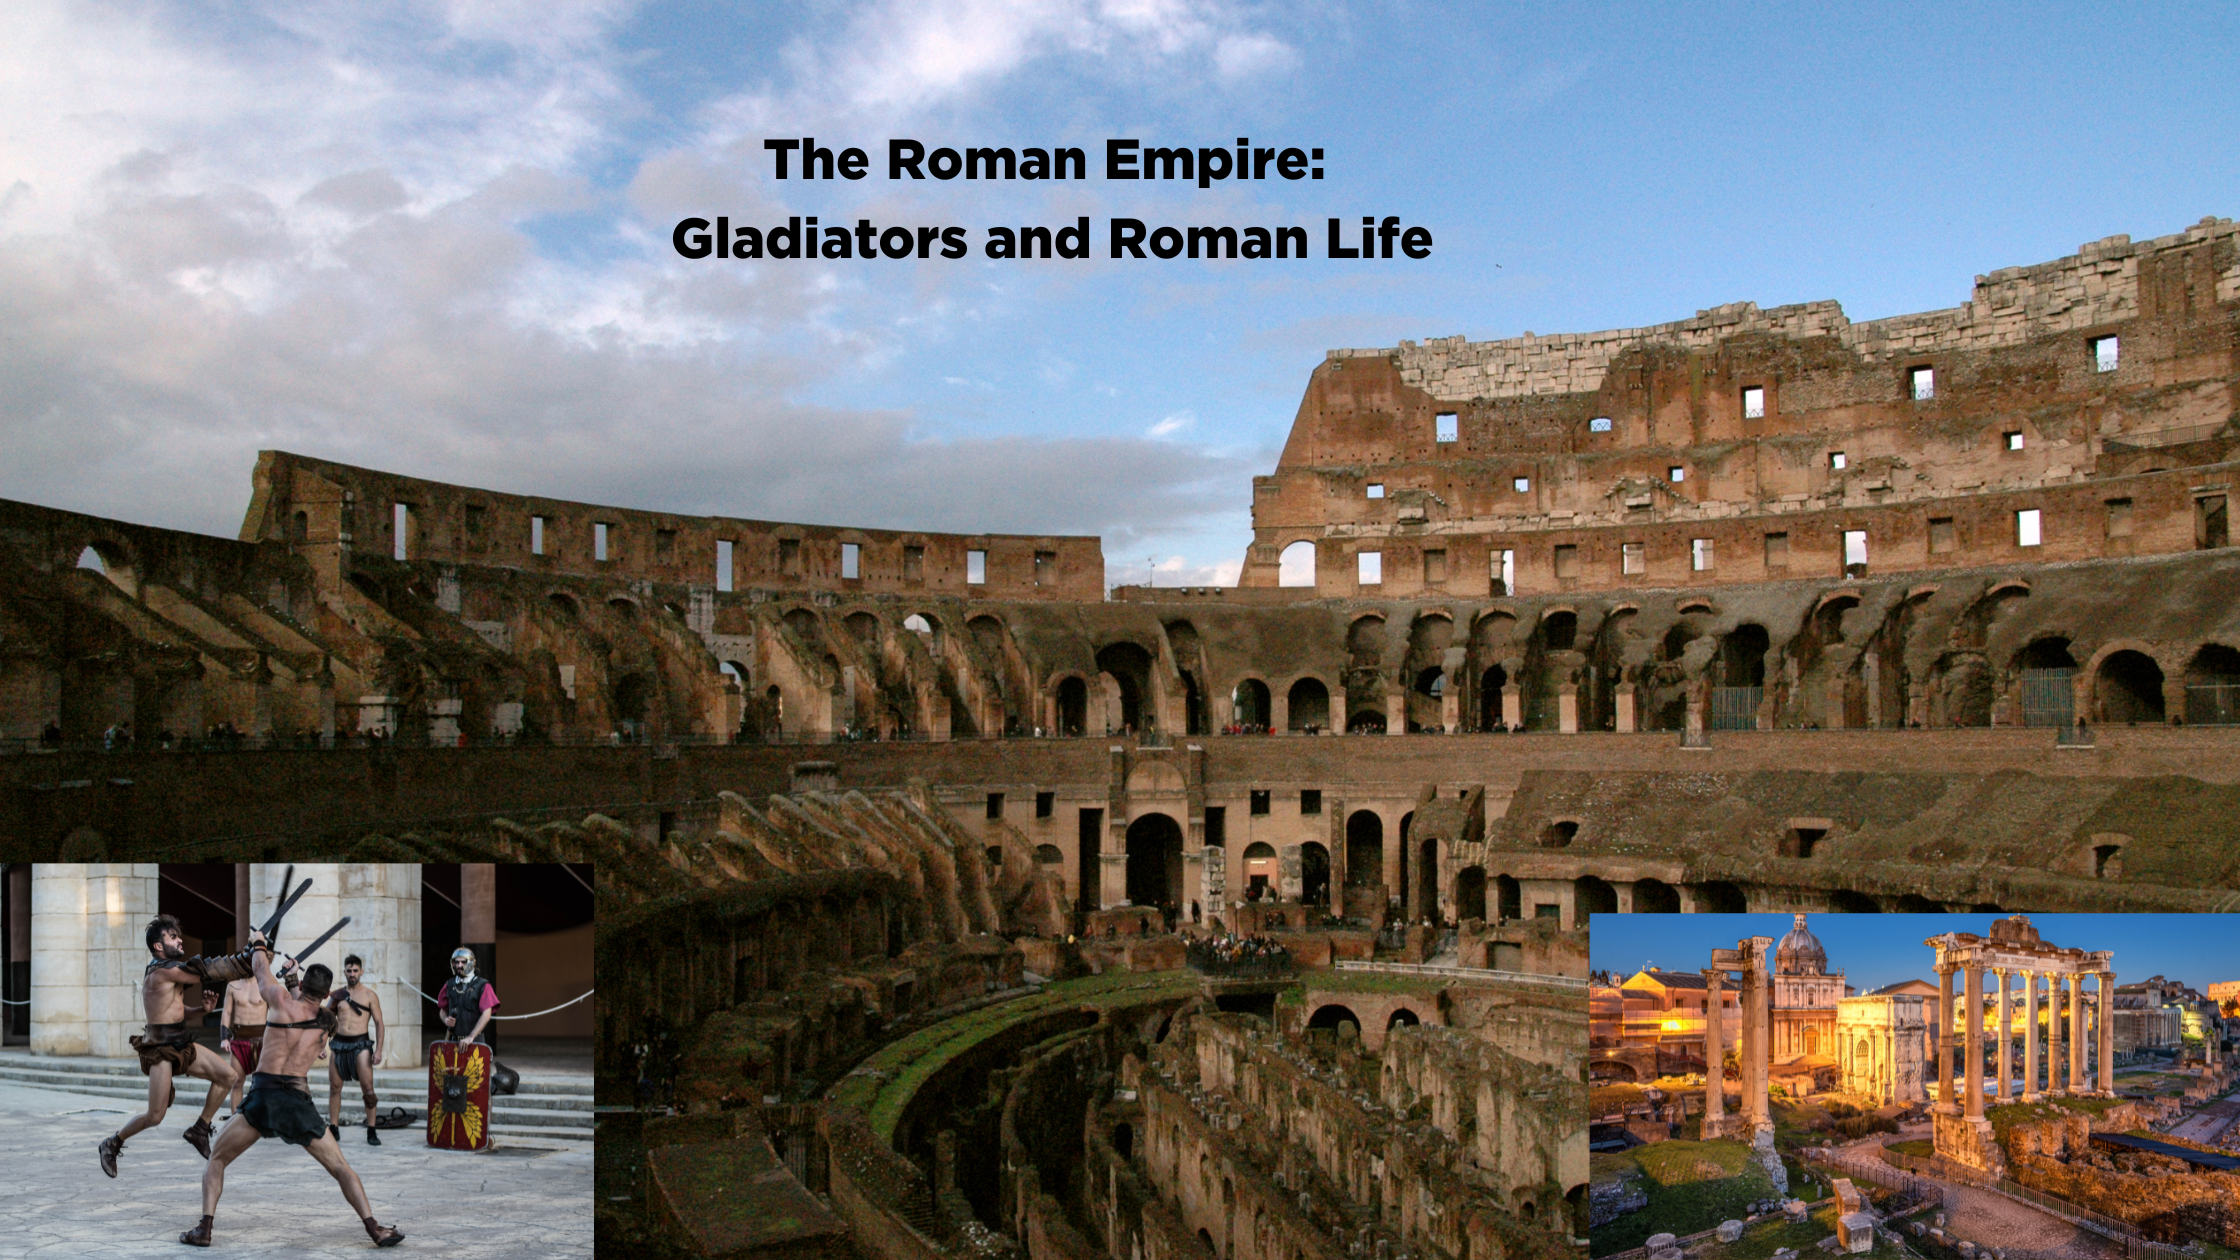 The Roman Empire: Gladiators and Roman Life